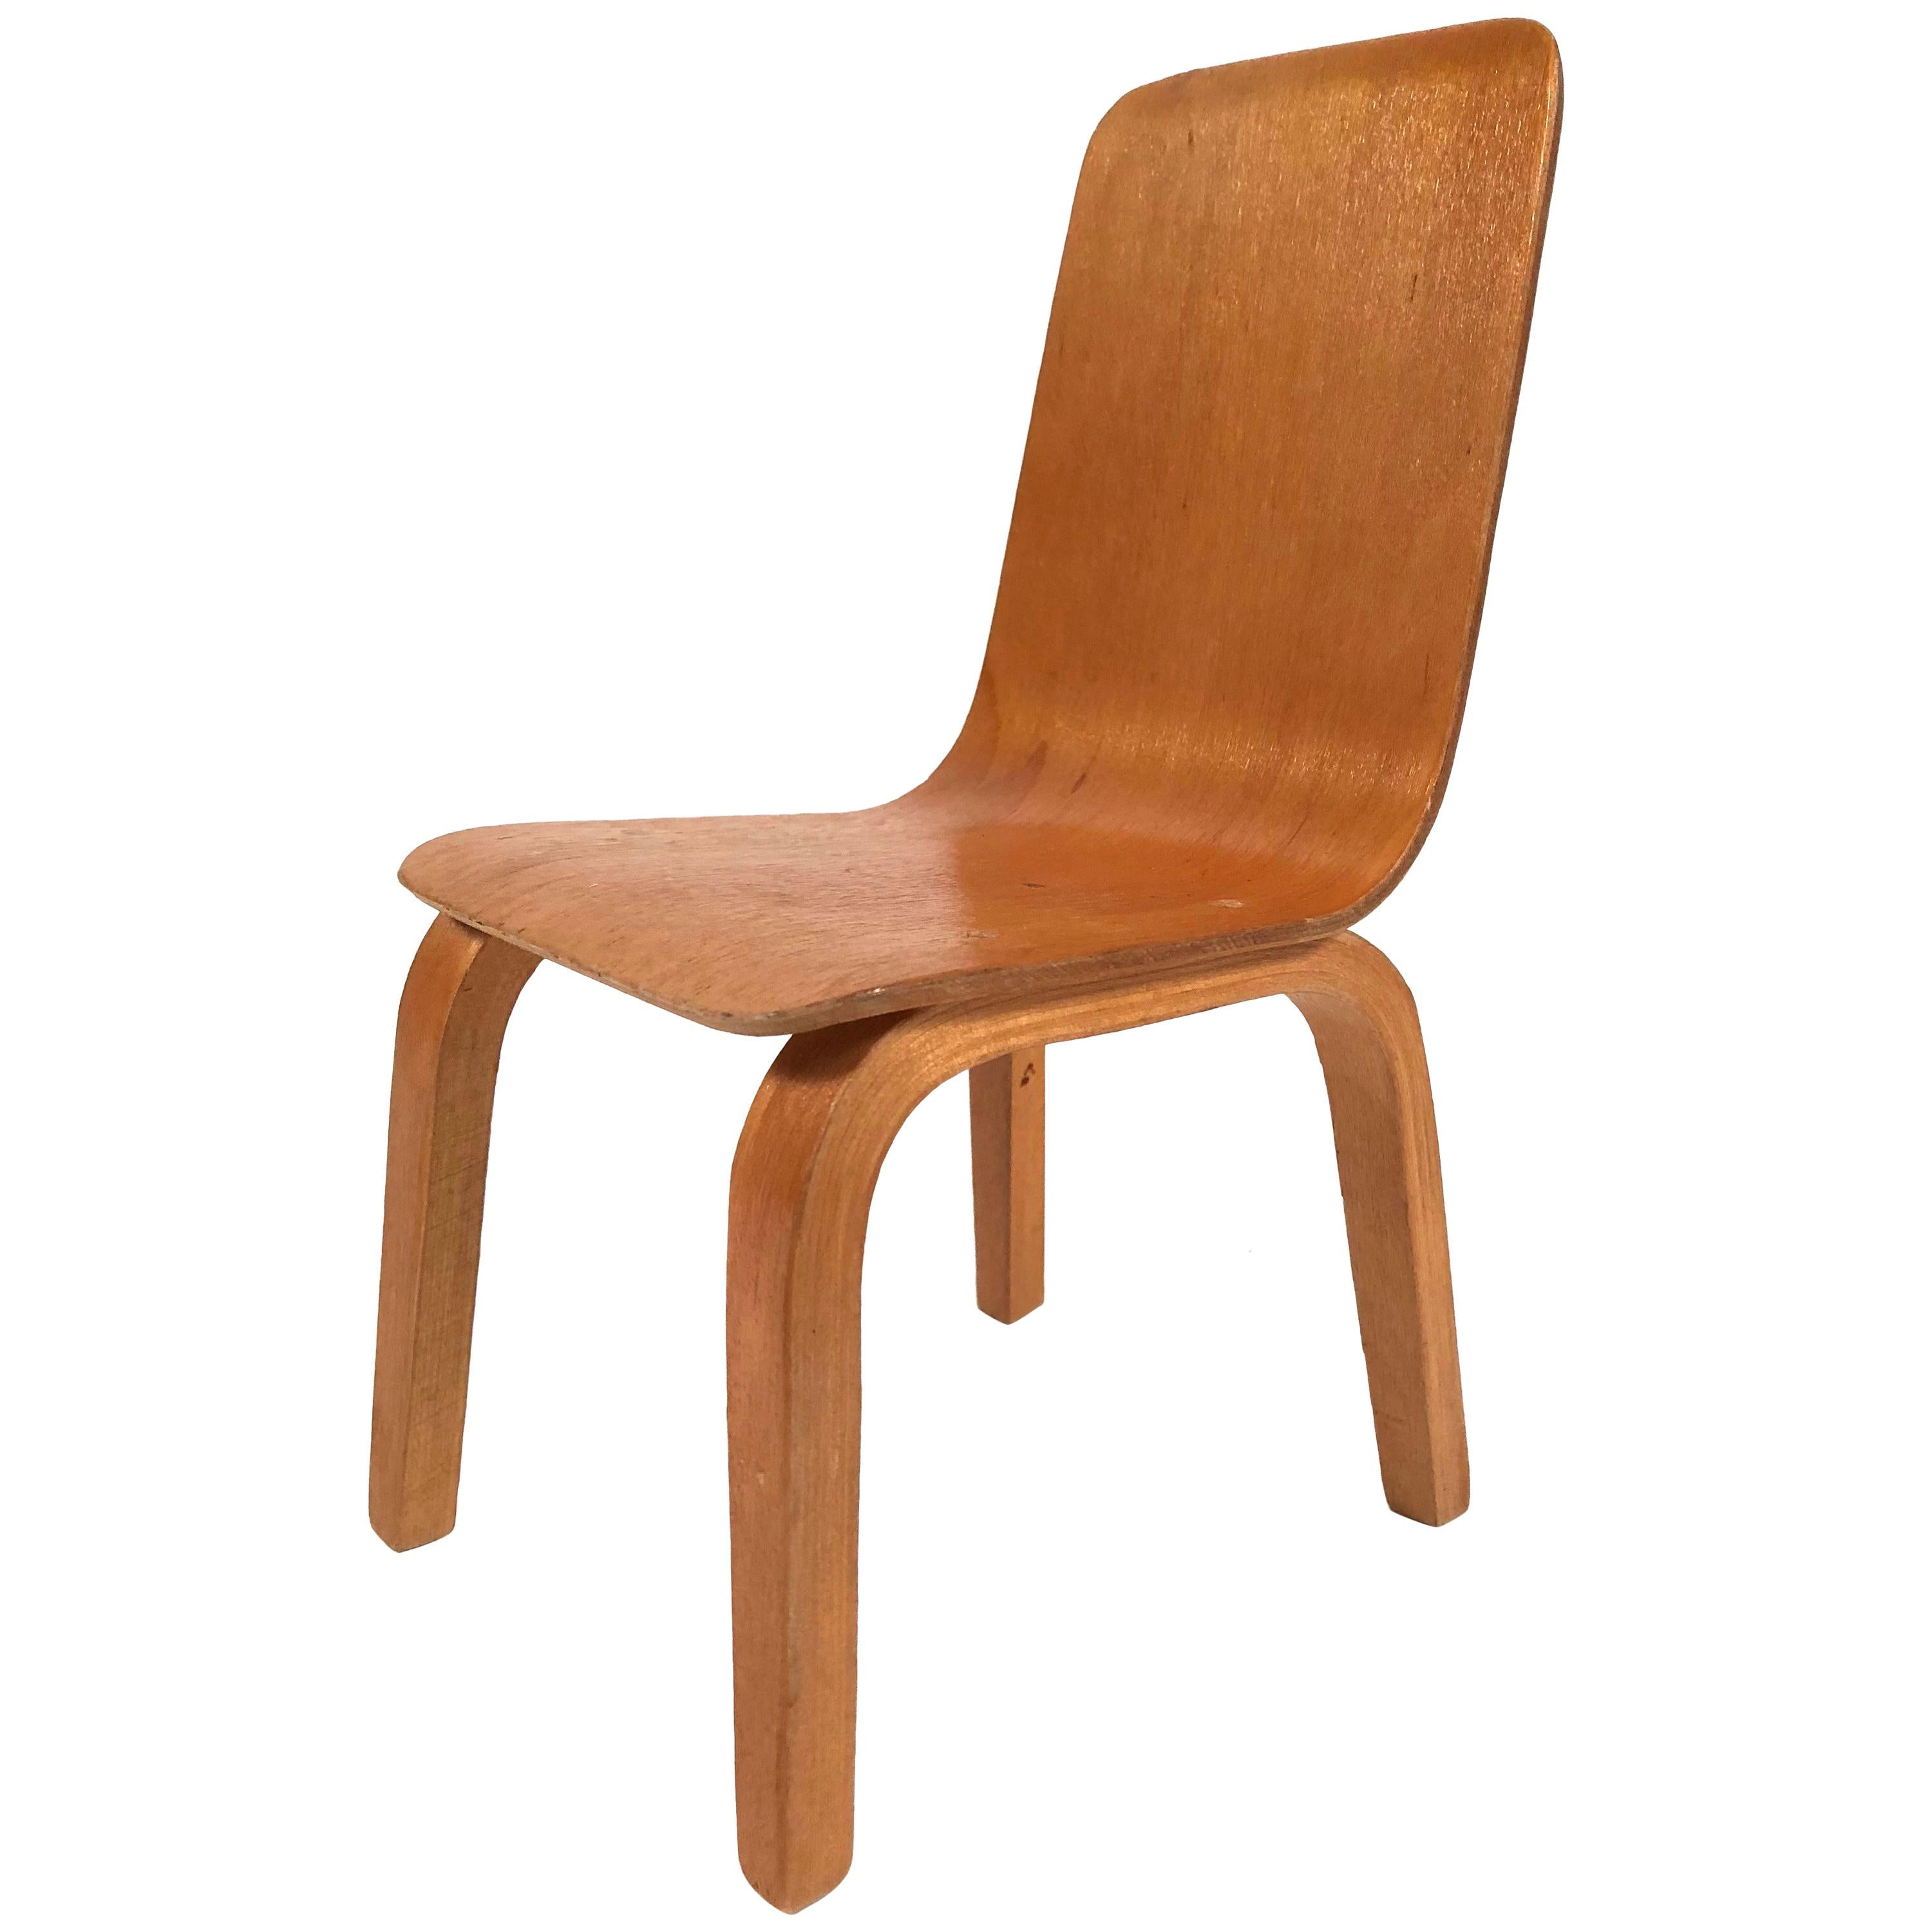 Russian Bentwood Chair Salesman's Model